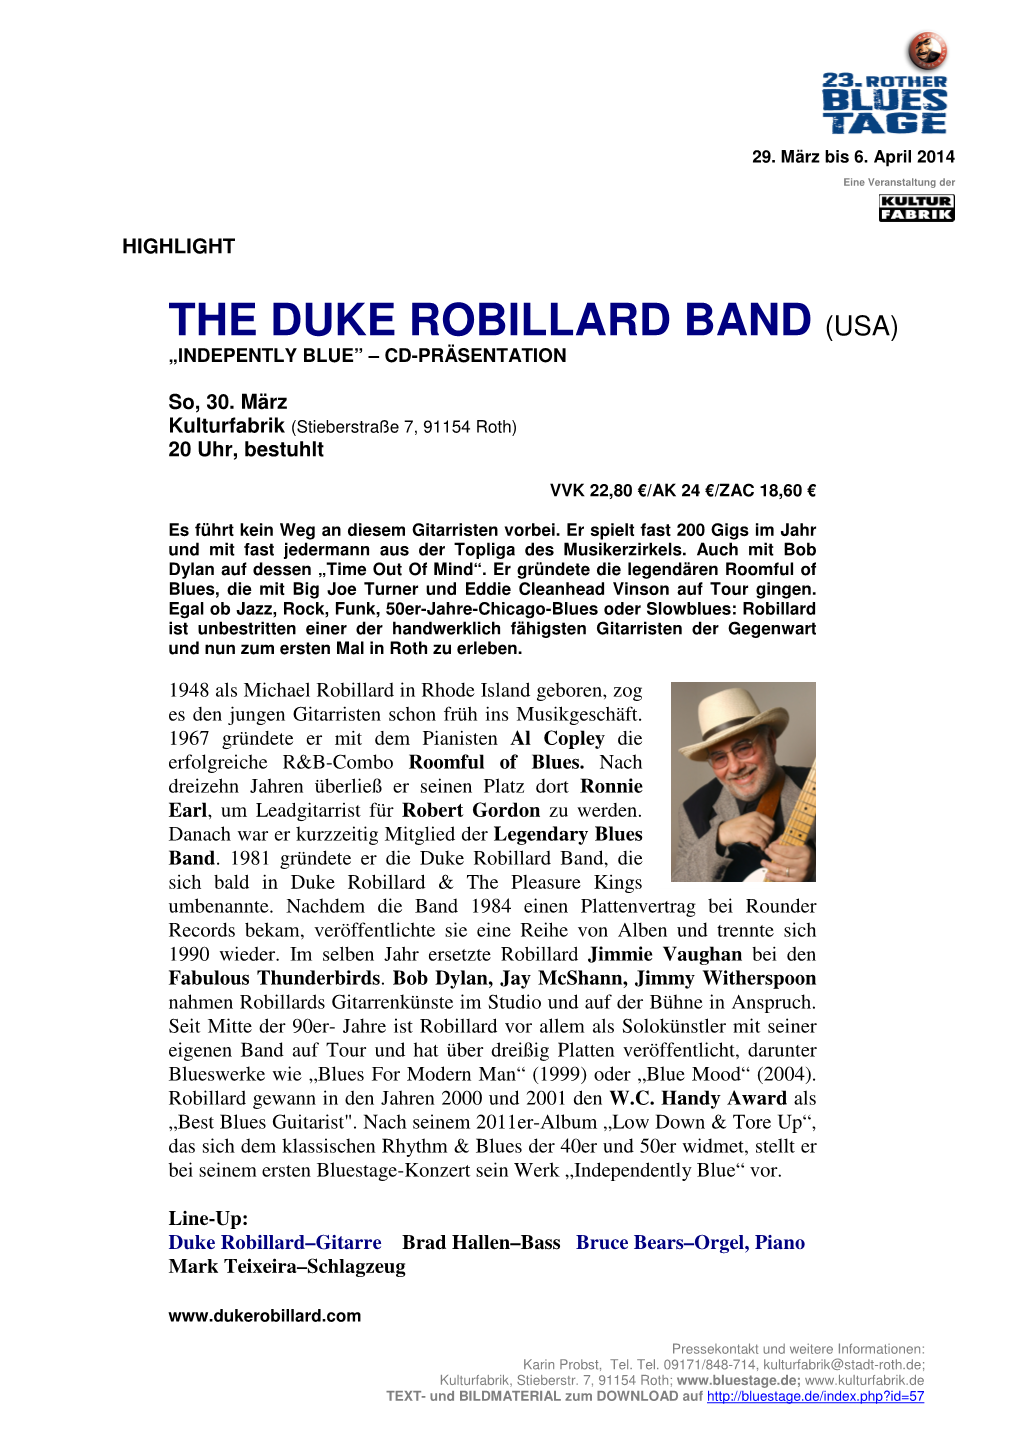 The Duke Robillard Band (Usa) „Indepently Blue” – Cd-Präsentation